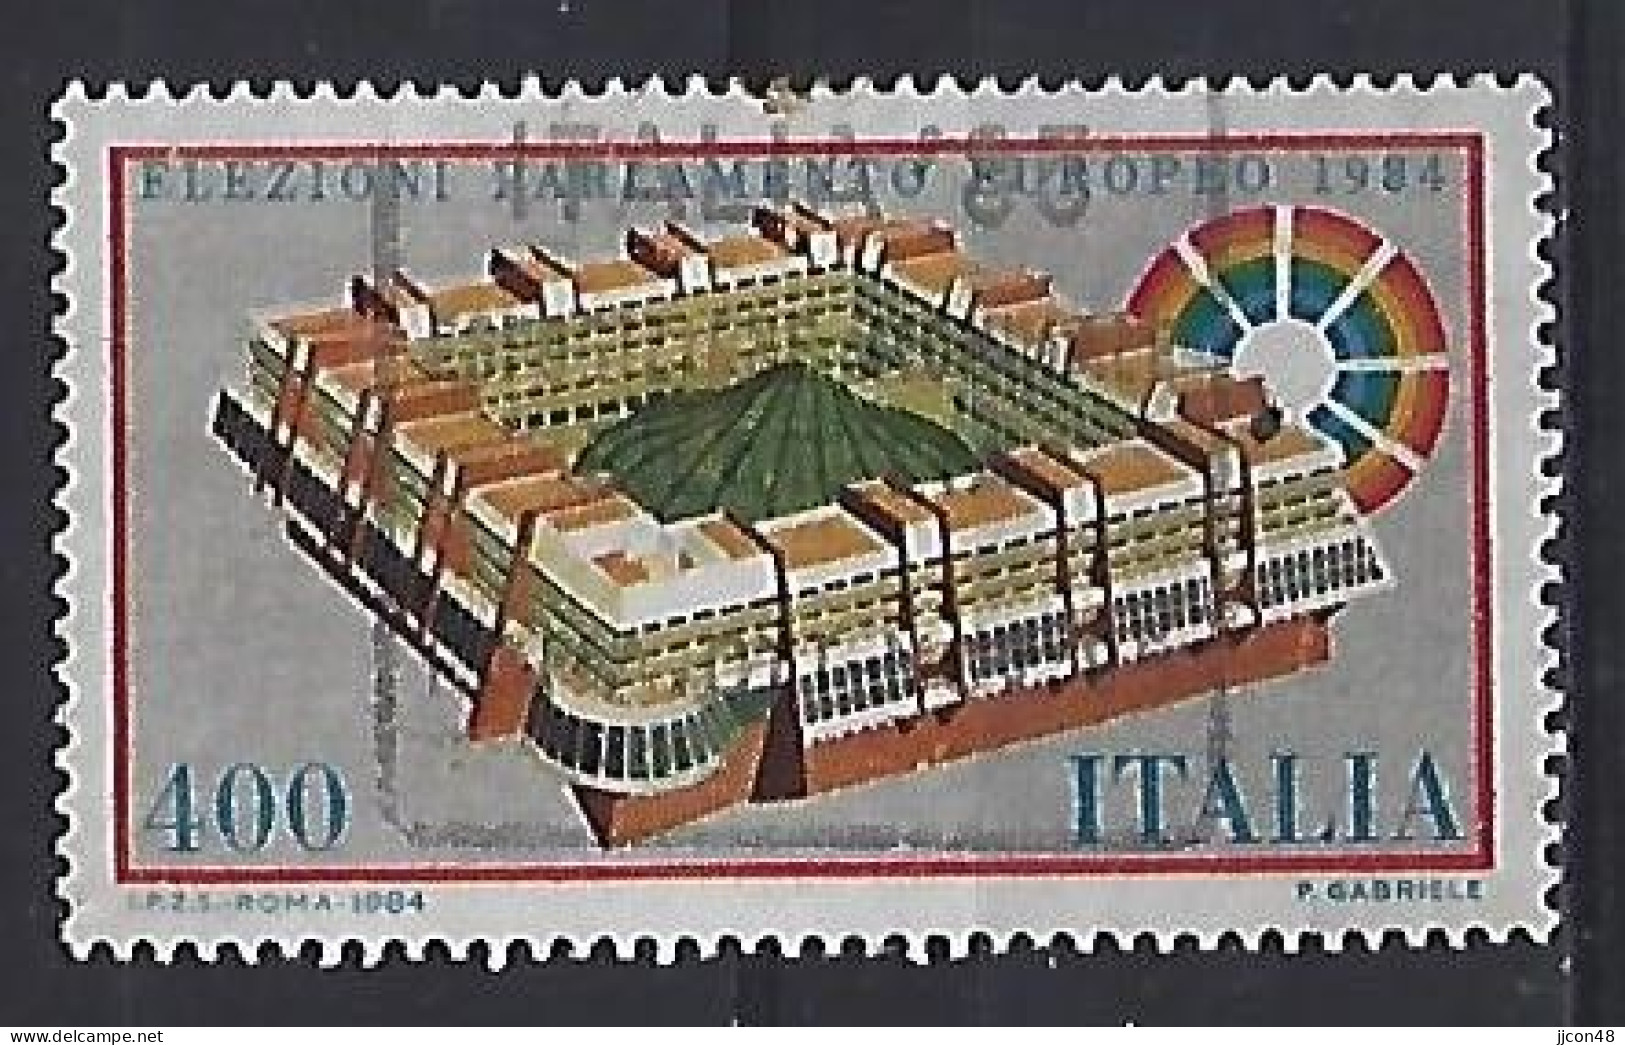 Italy 1984  Direktwahlen Europaischen Parlament (o) Mi.1878 - 1981-90: Oblitérés